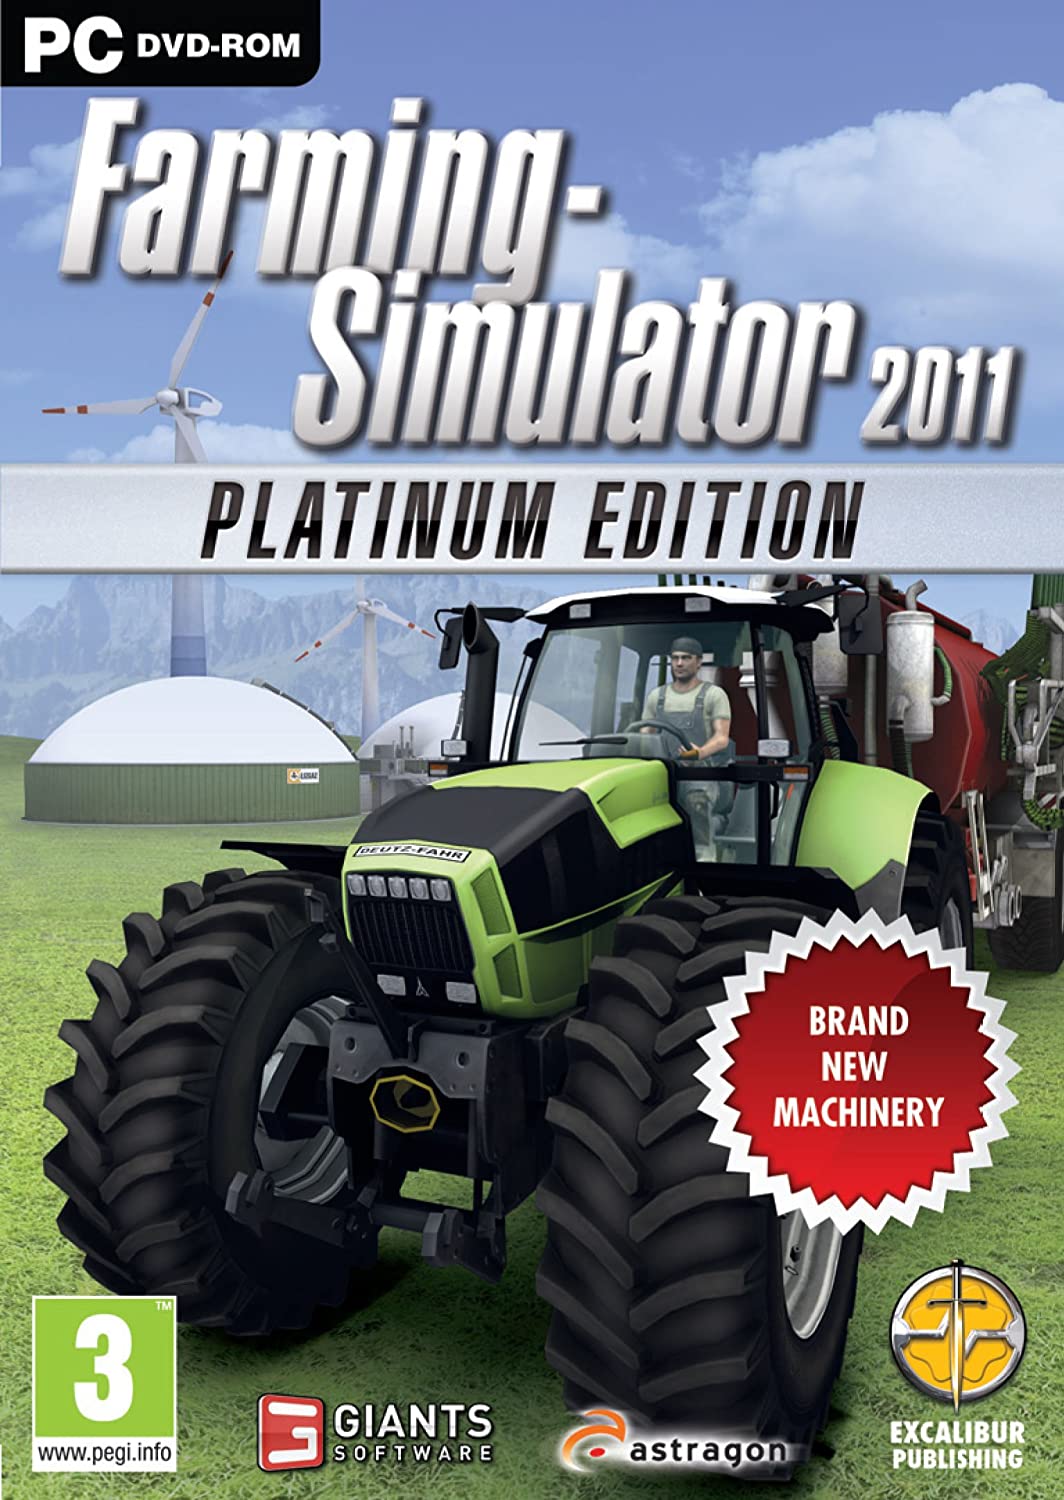 Farming Simulator 2011 - The Platinum Edition (PC DVD)